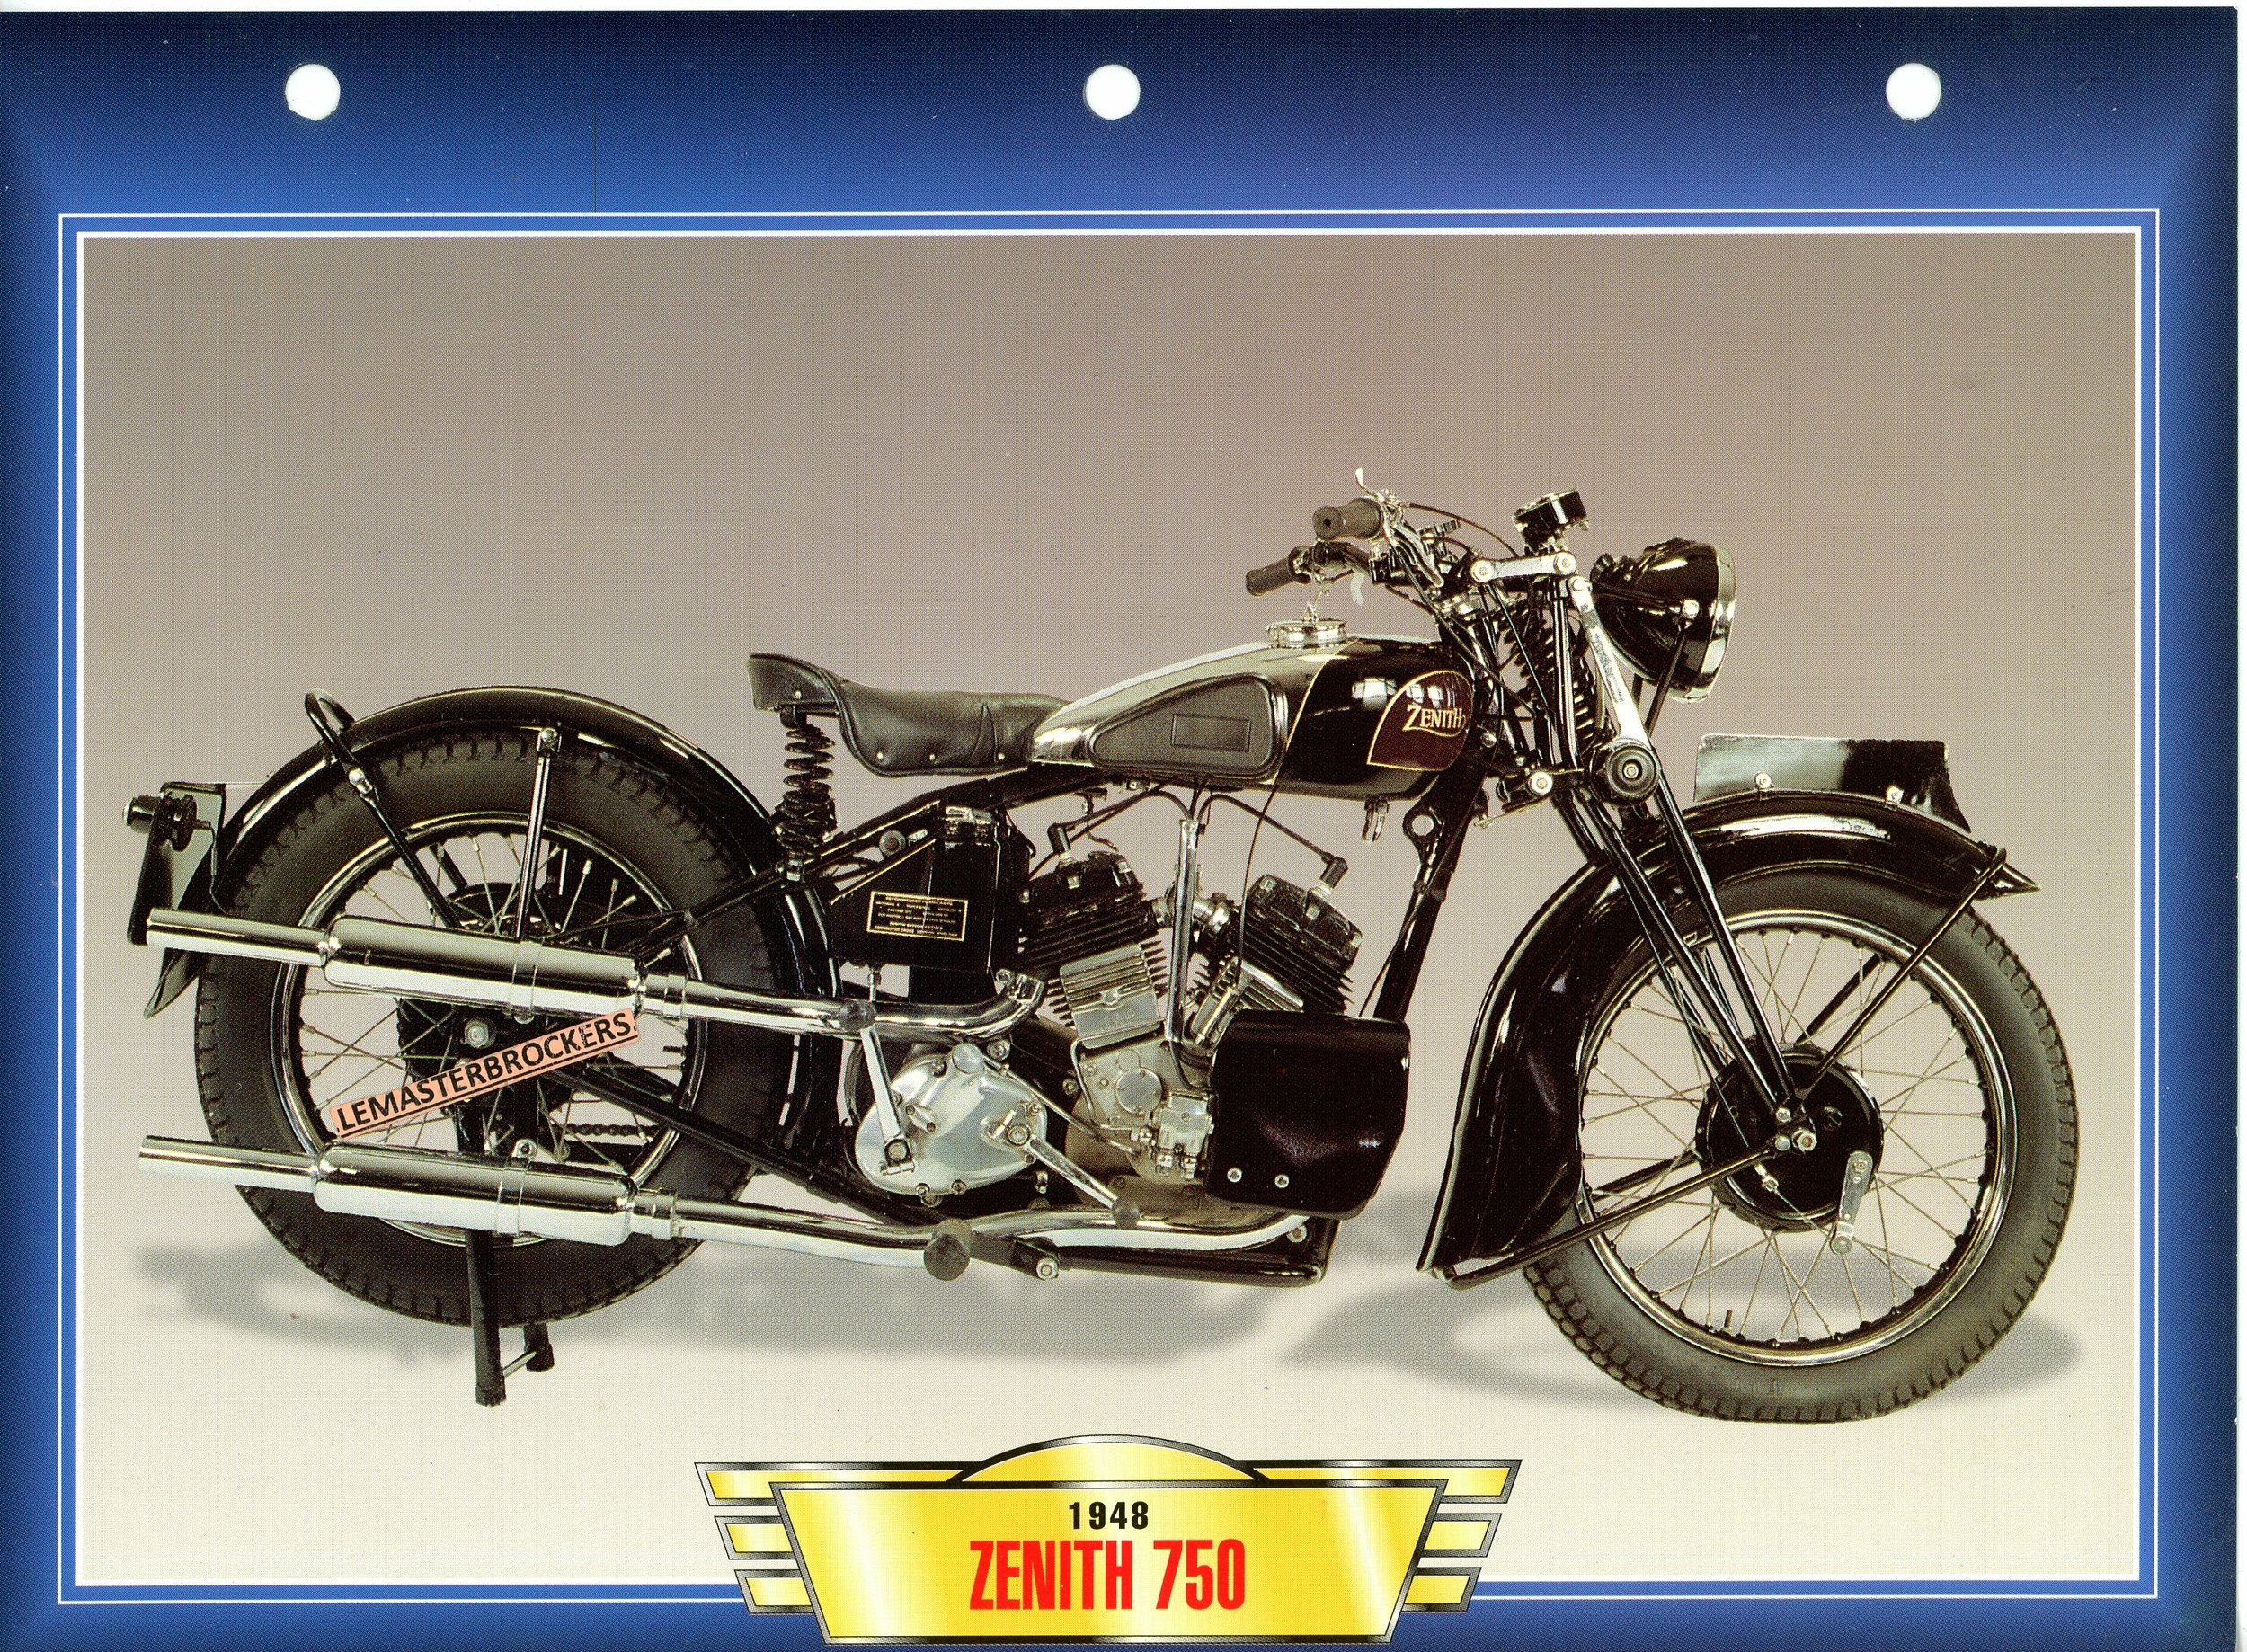 ZENITH-750-1948-FICHE-MOTO-LEMASTERBROCKERS